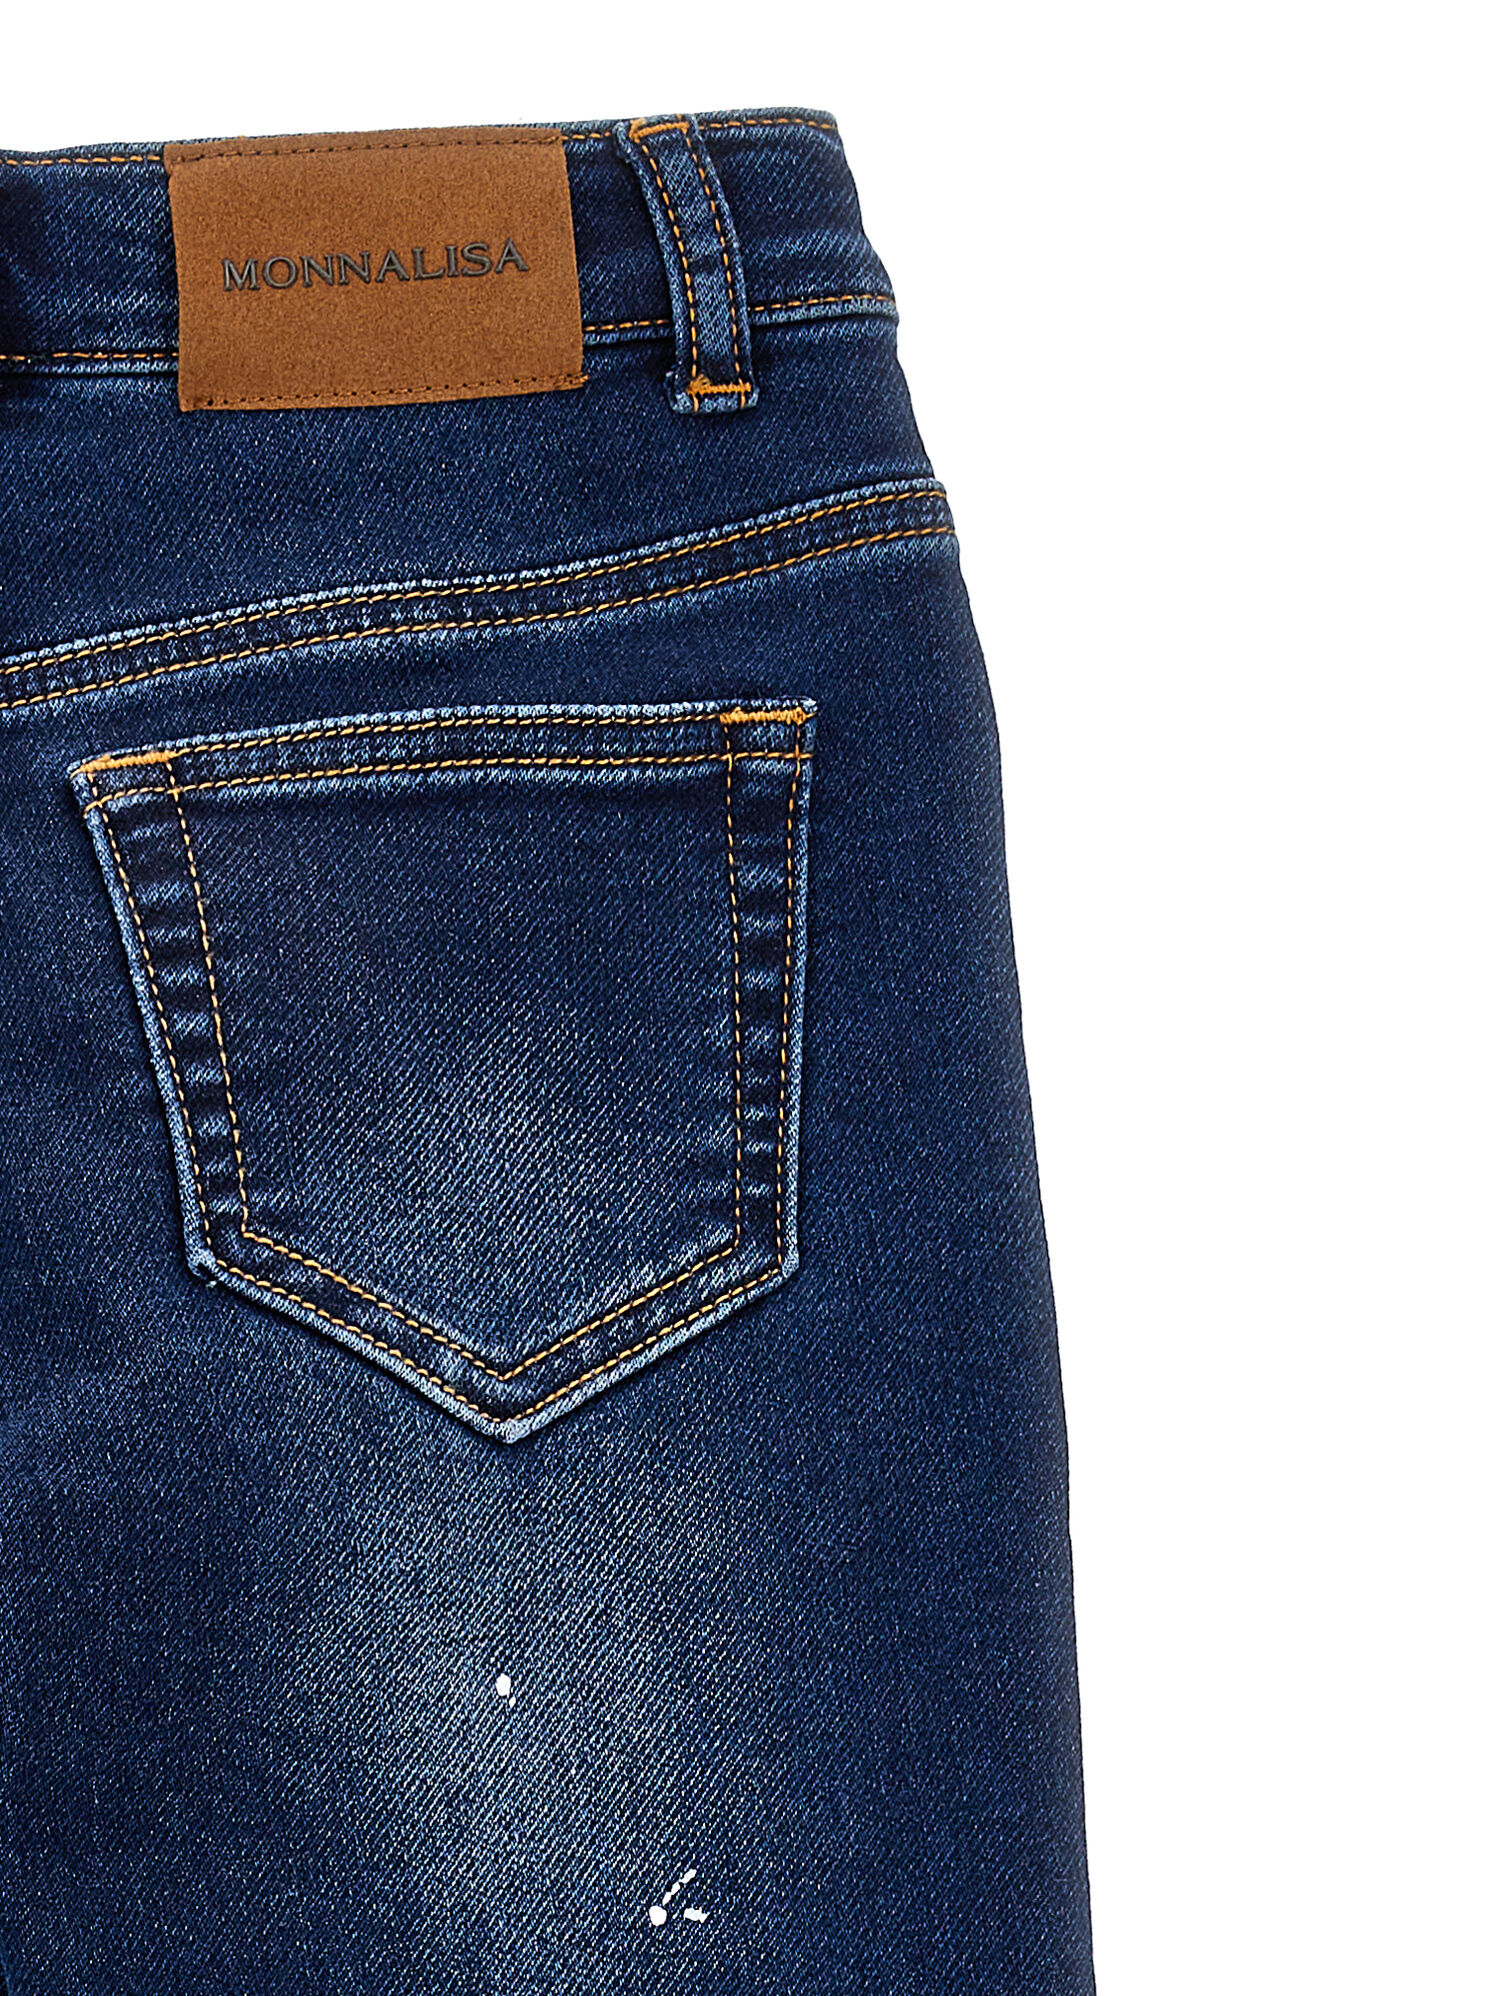 Vintage-effect denim jeans boy | Monnalisa United States